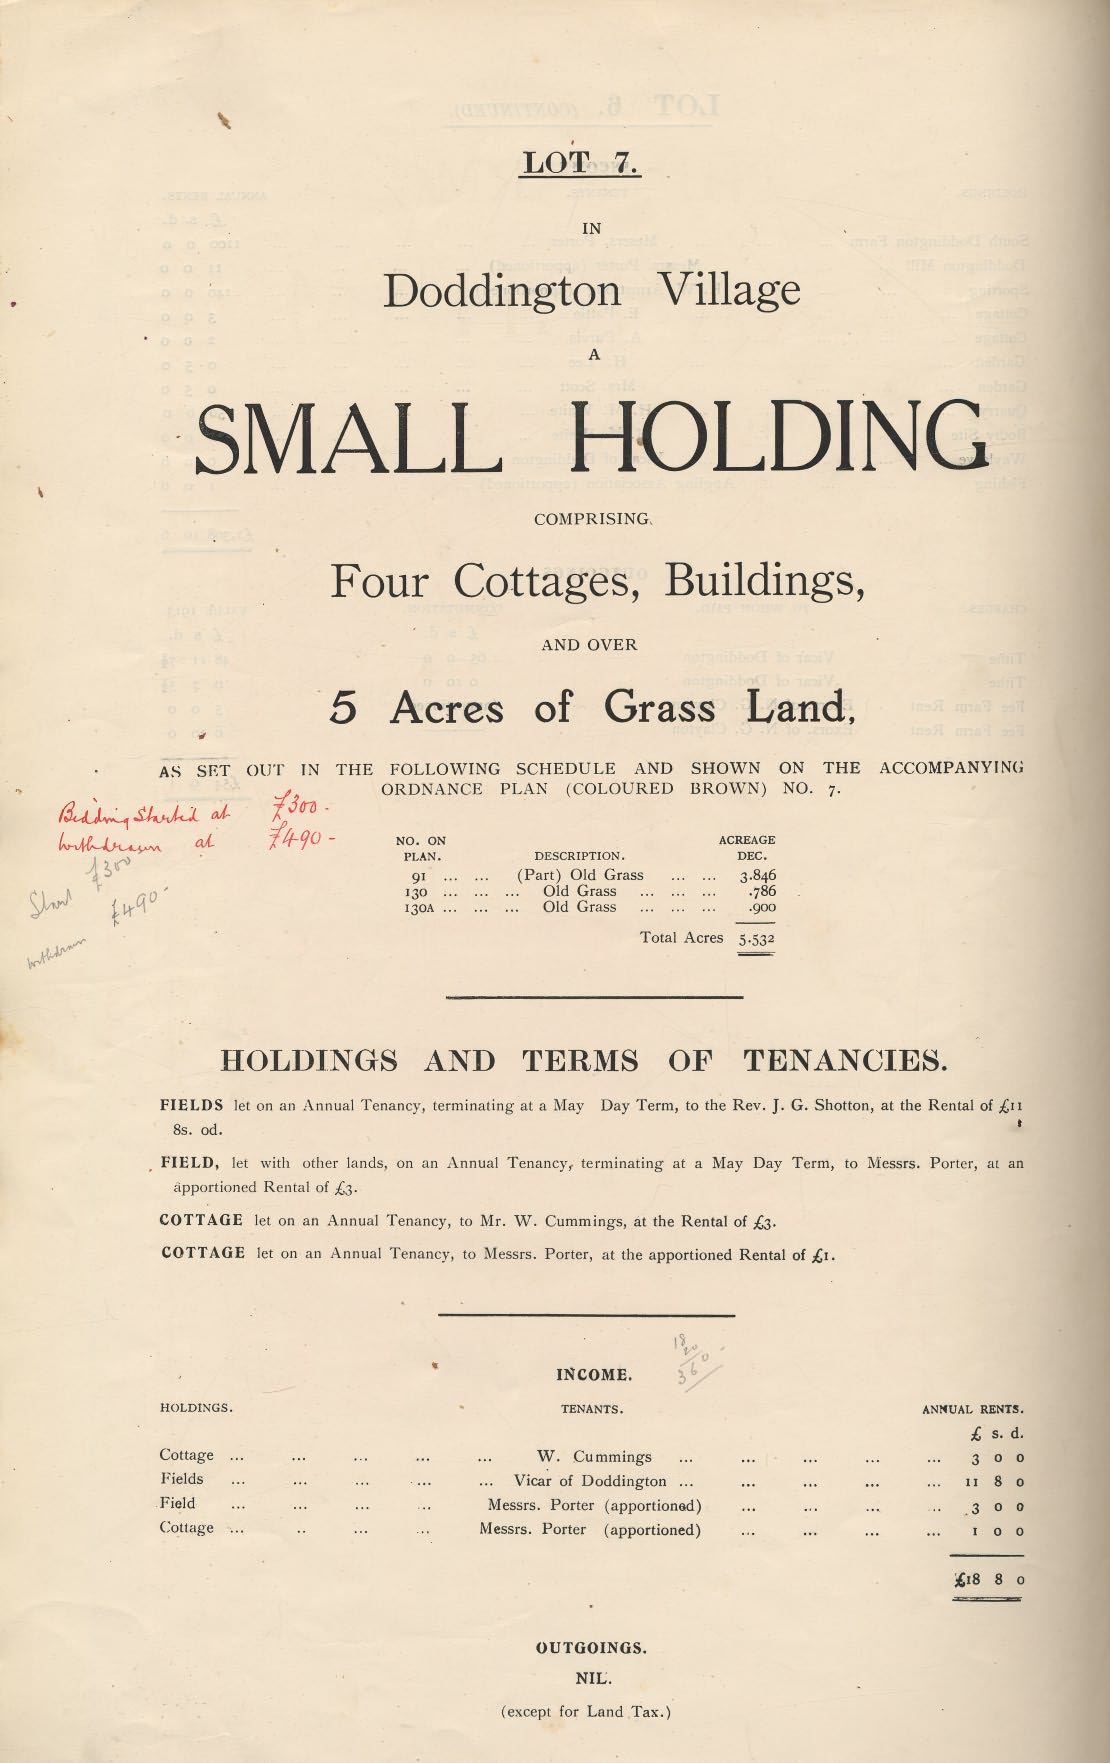 Picture of Doddington Village Small Holding Sale Catalogue